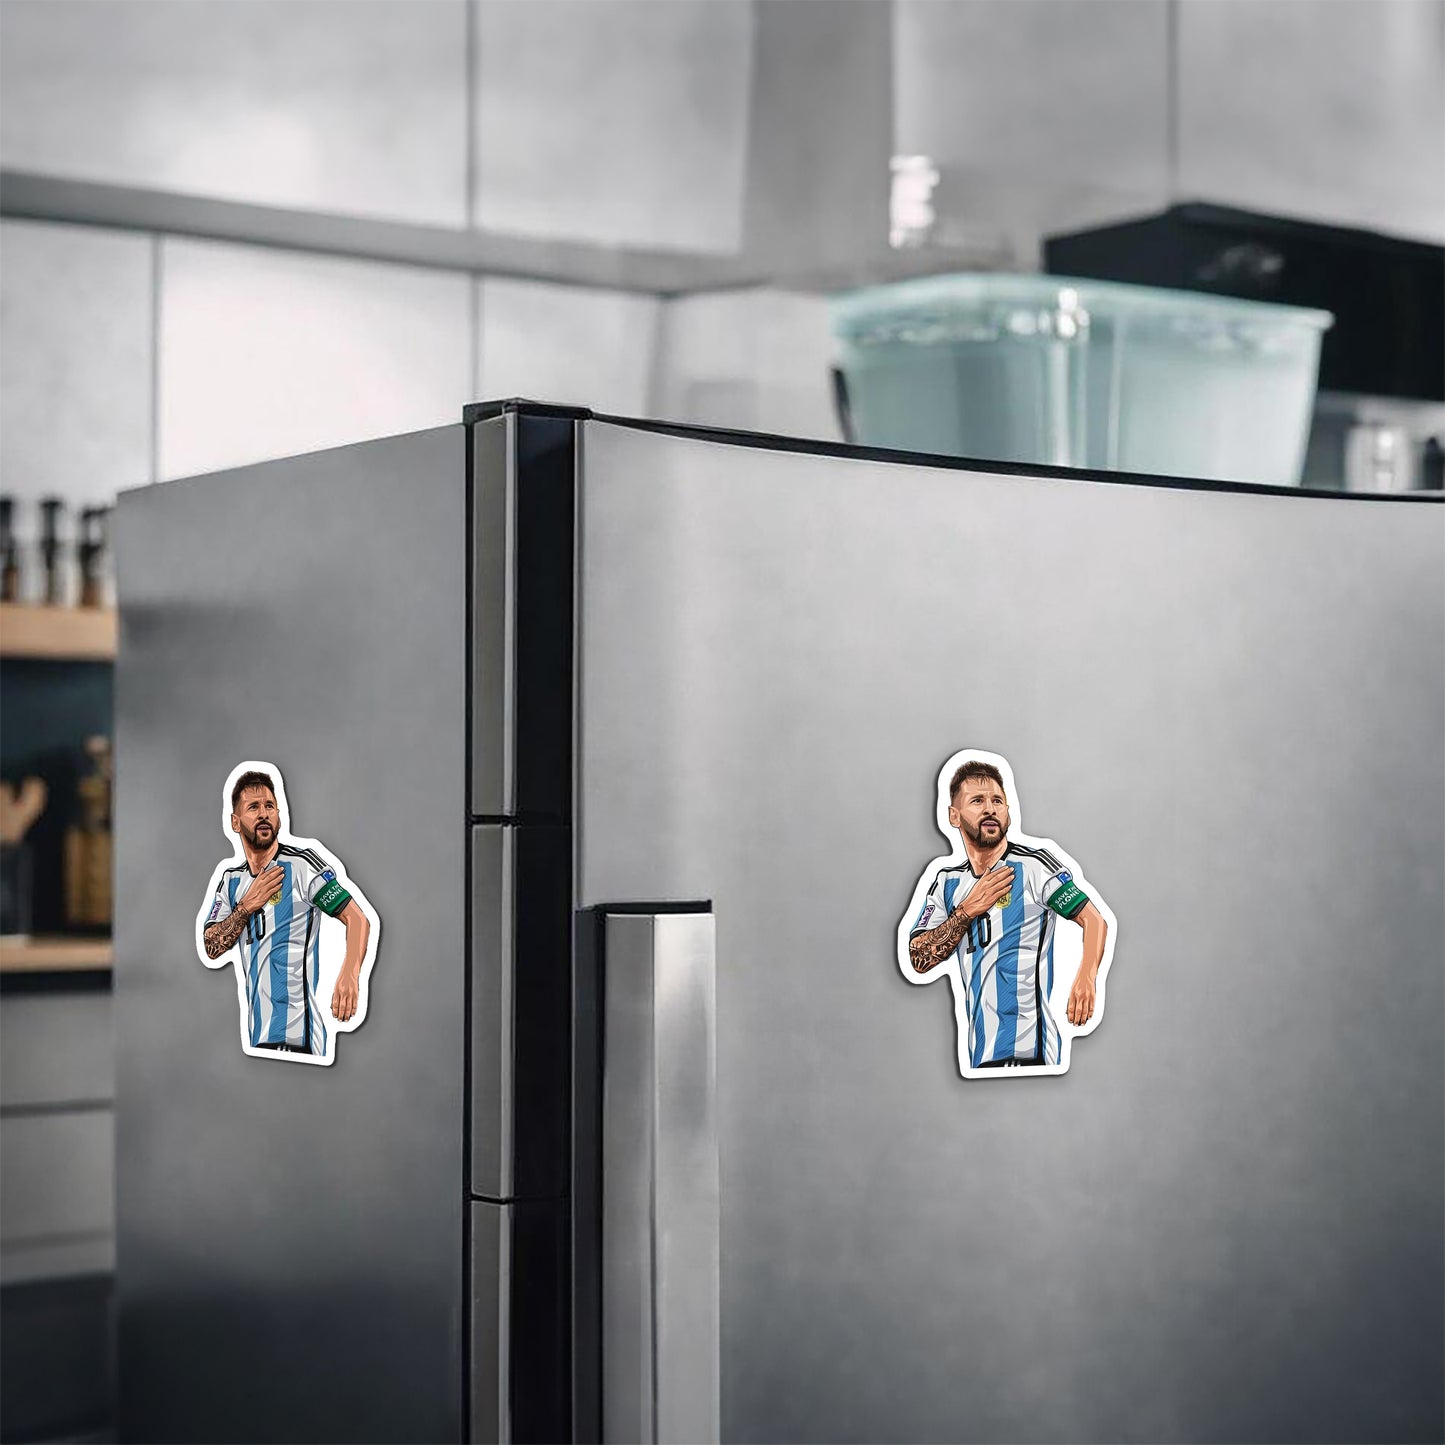 Argentina Lionel Messi Magnetic Sticker